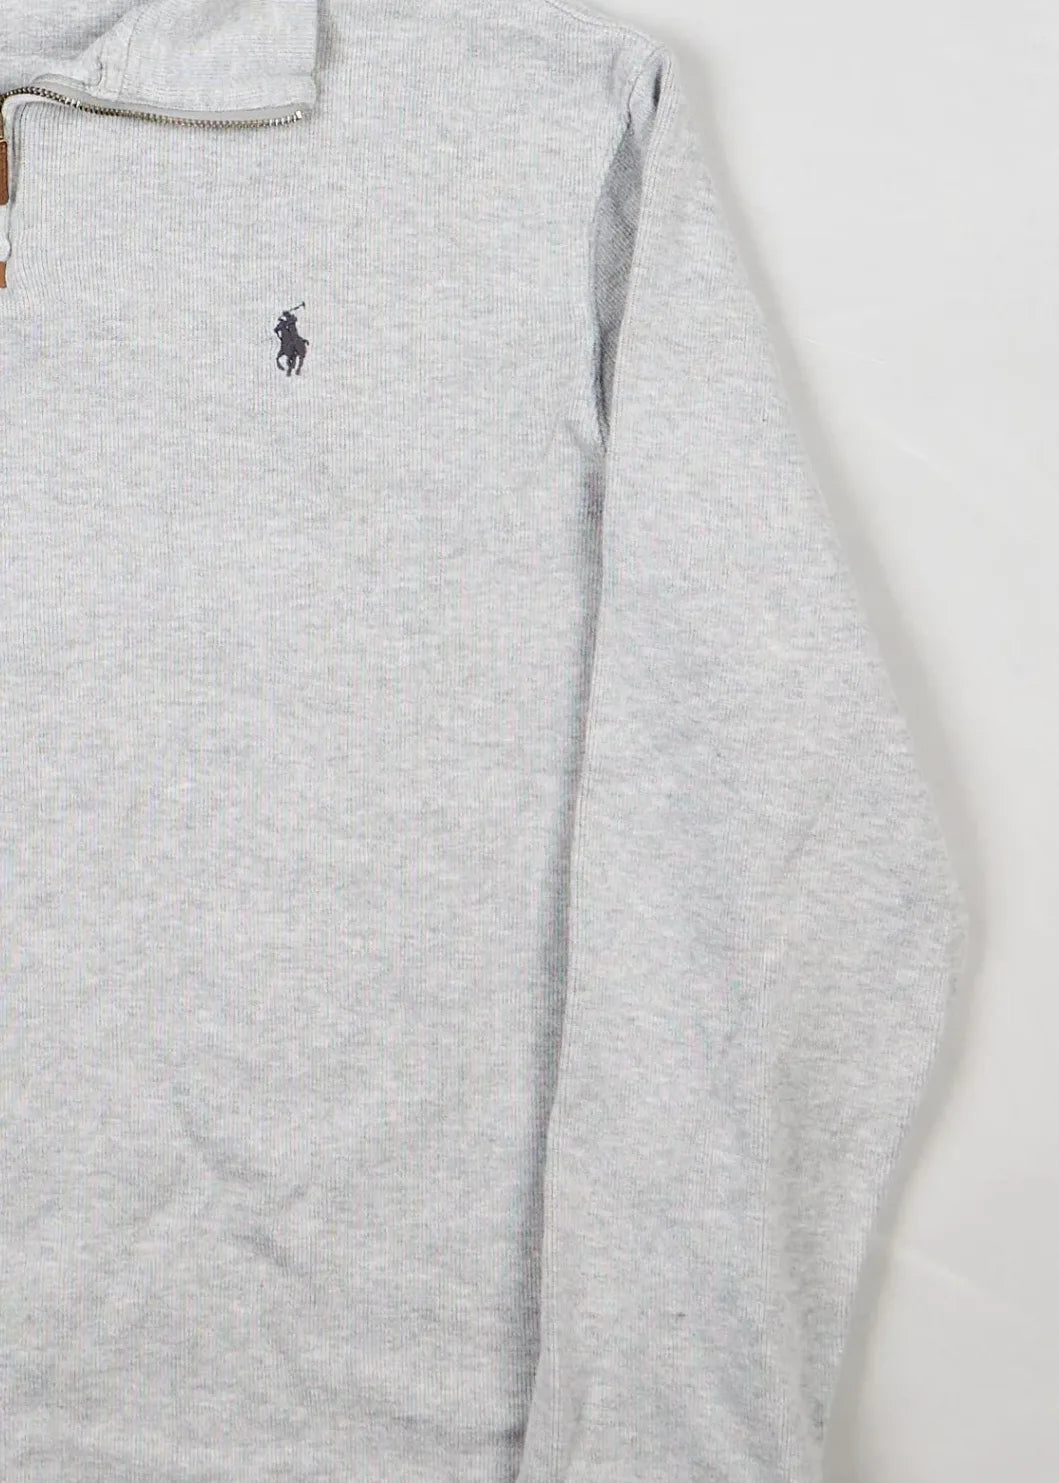 Ralph Lauren - Sweater (L) Right